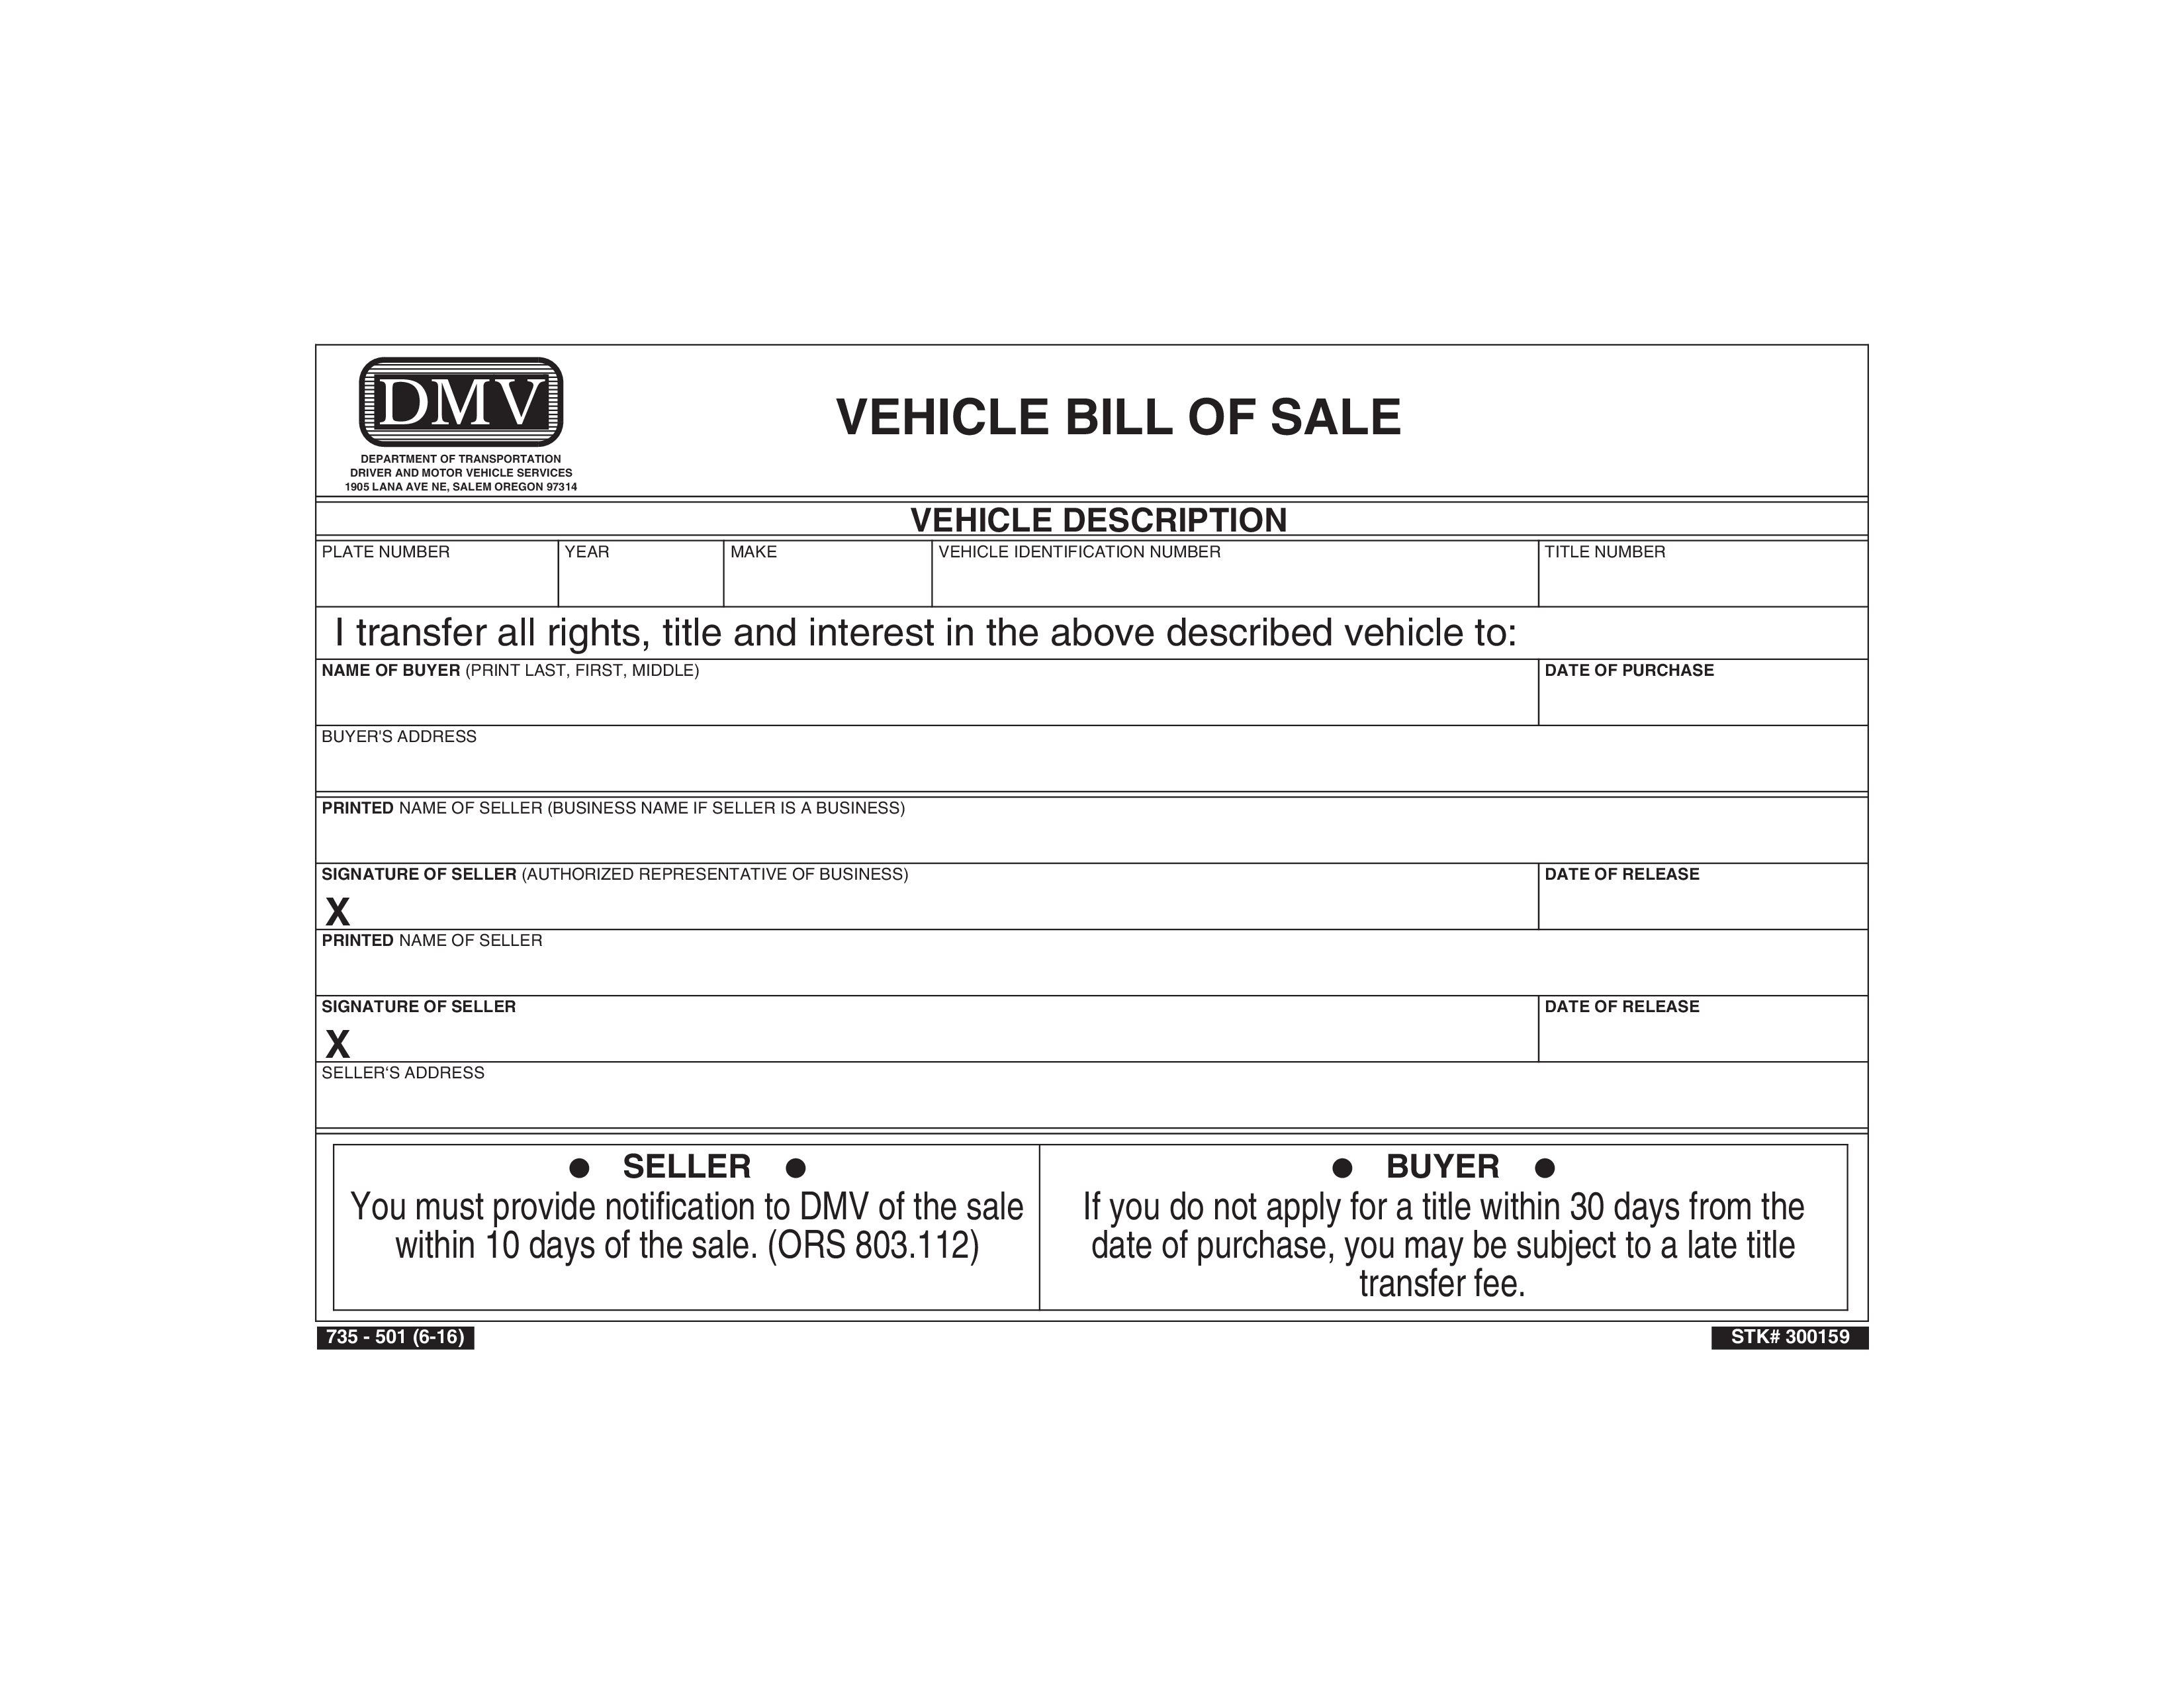 used vehicle bill of sale voorbeeld afbeelding 